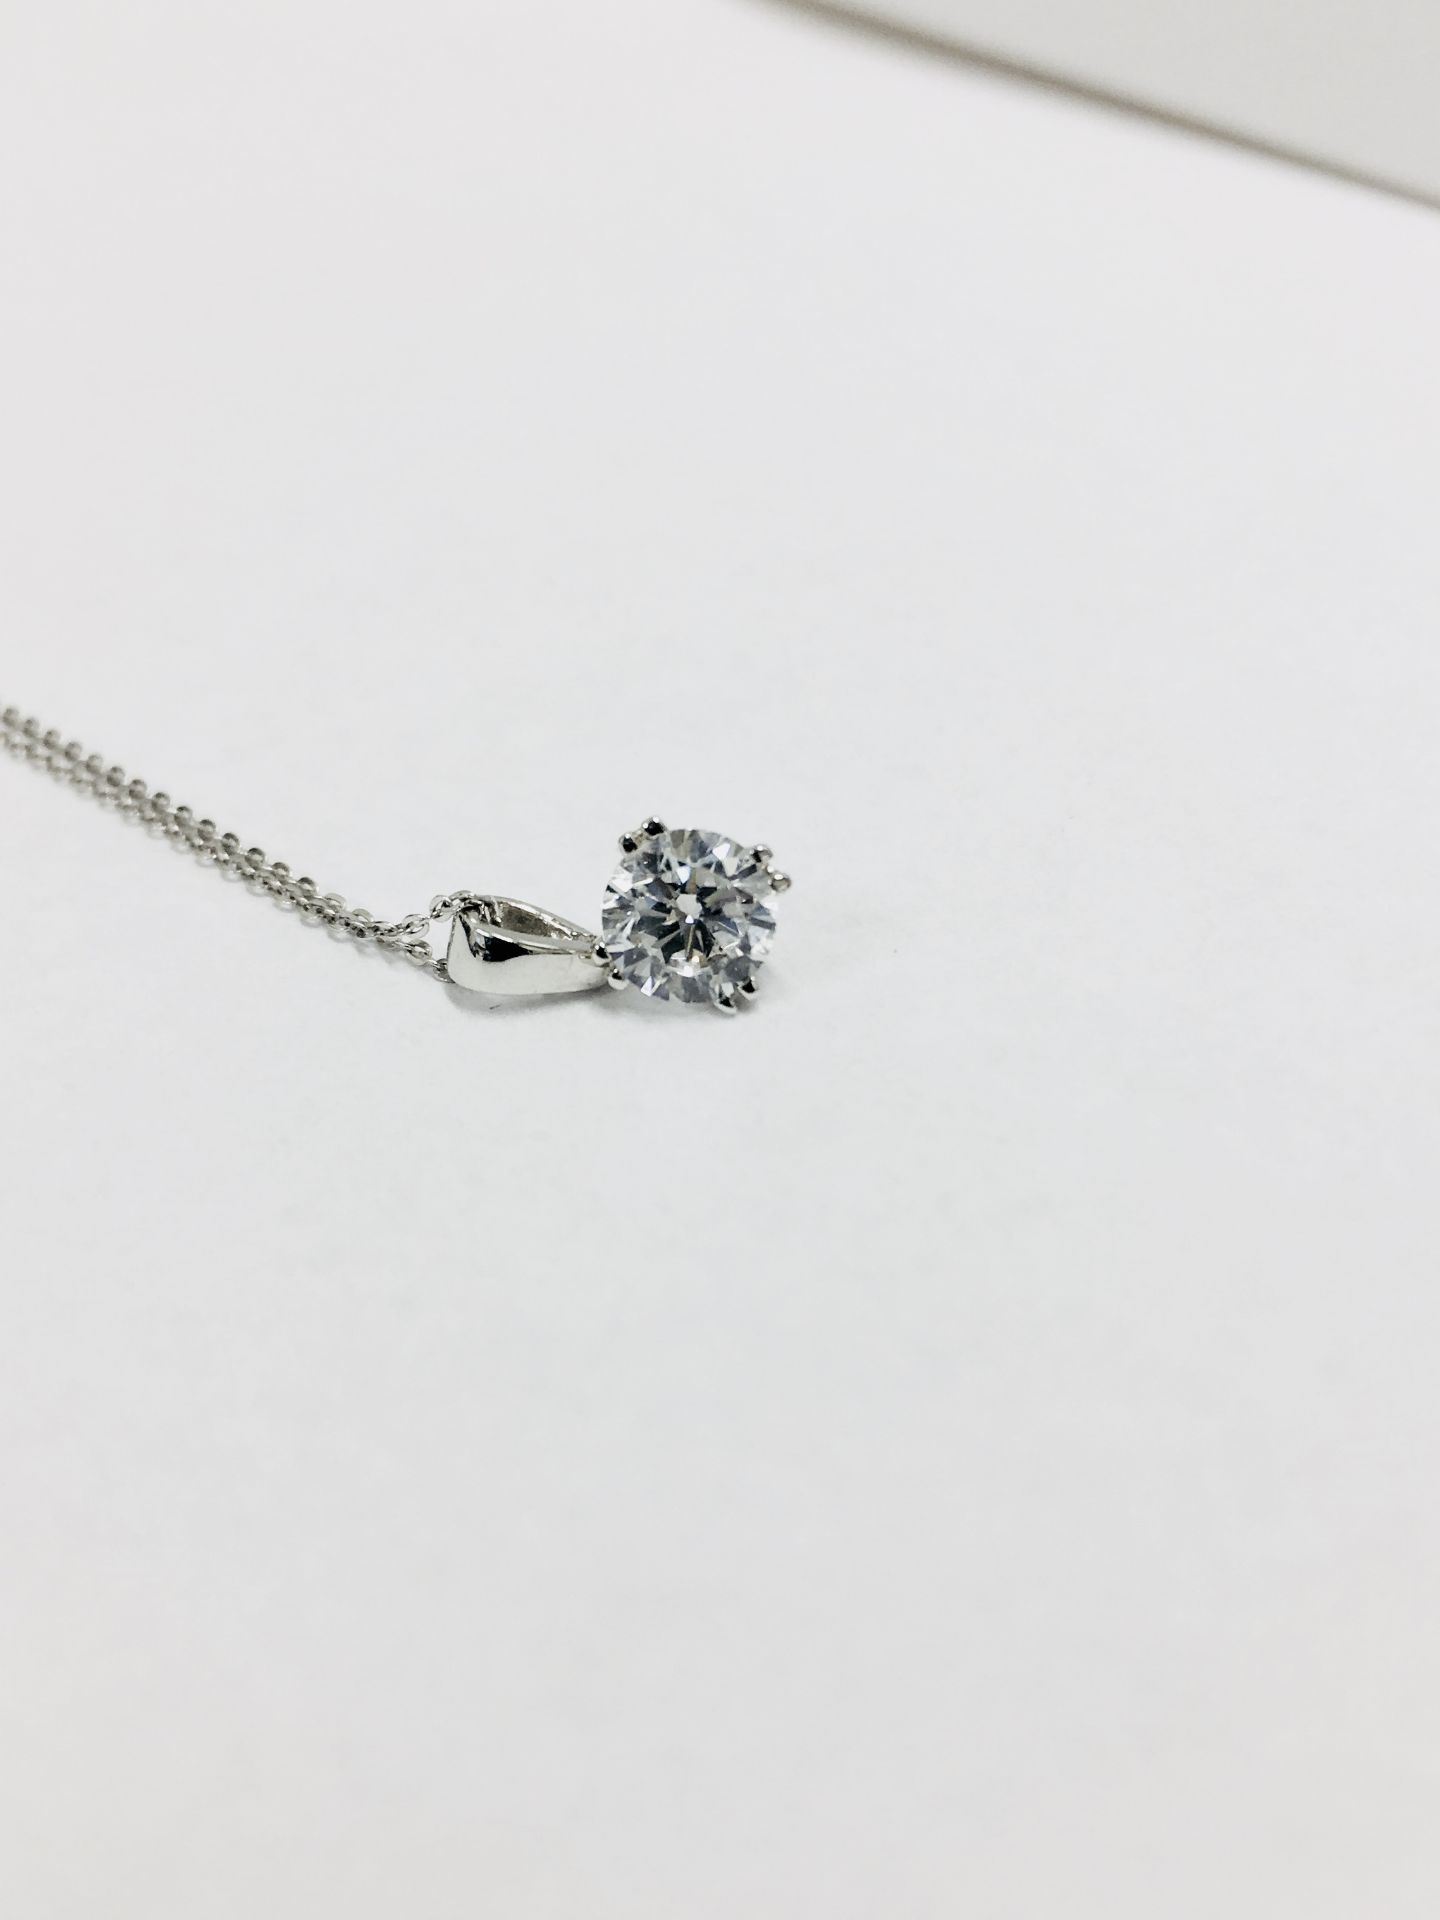 Platinum 1.02ct diamond pendant,1.02ct natural diamond si2 h colour ,1.9gms platinum mount,18ct - Image 4 of 7